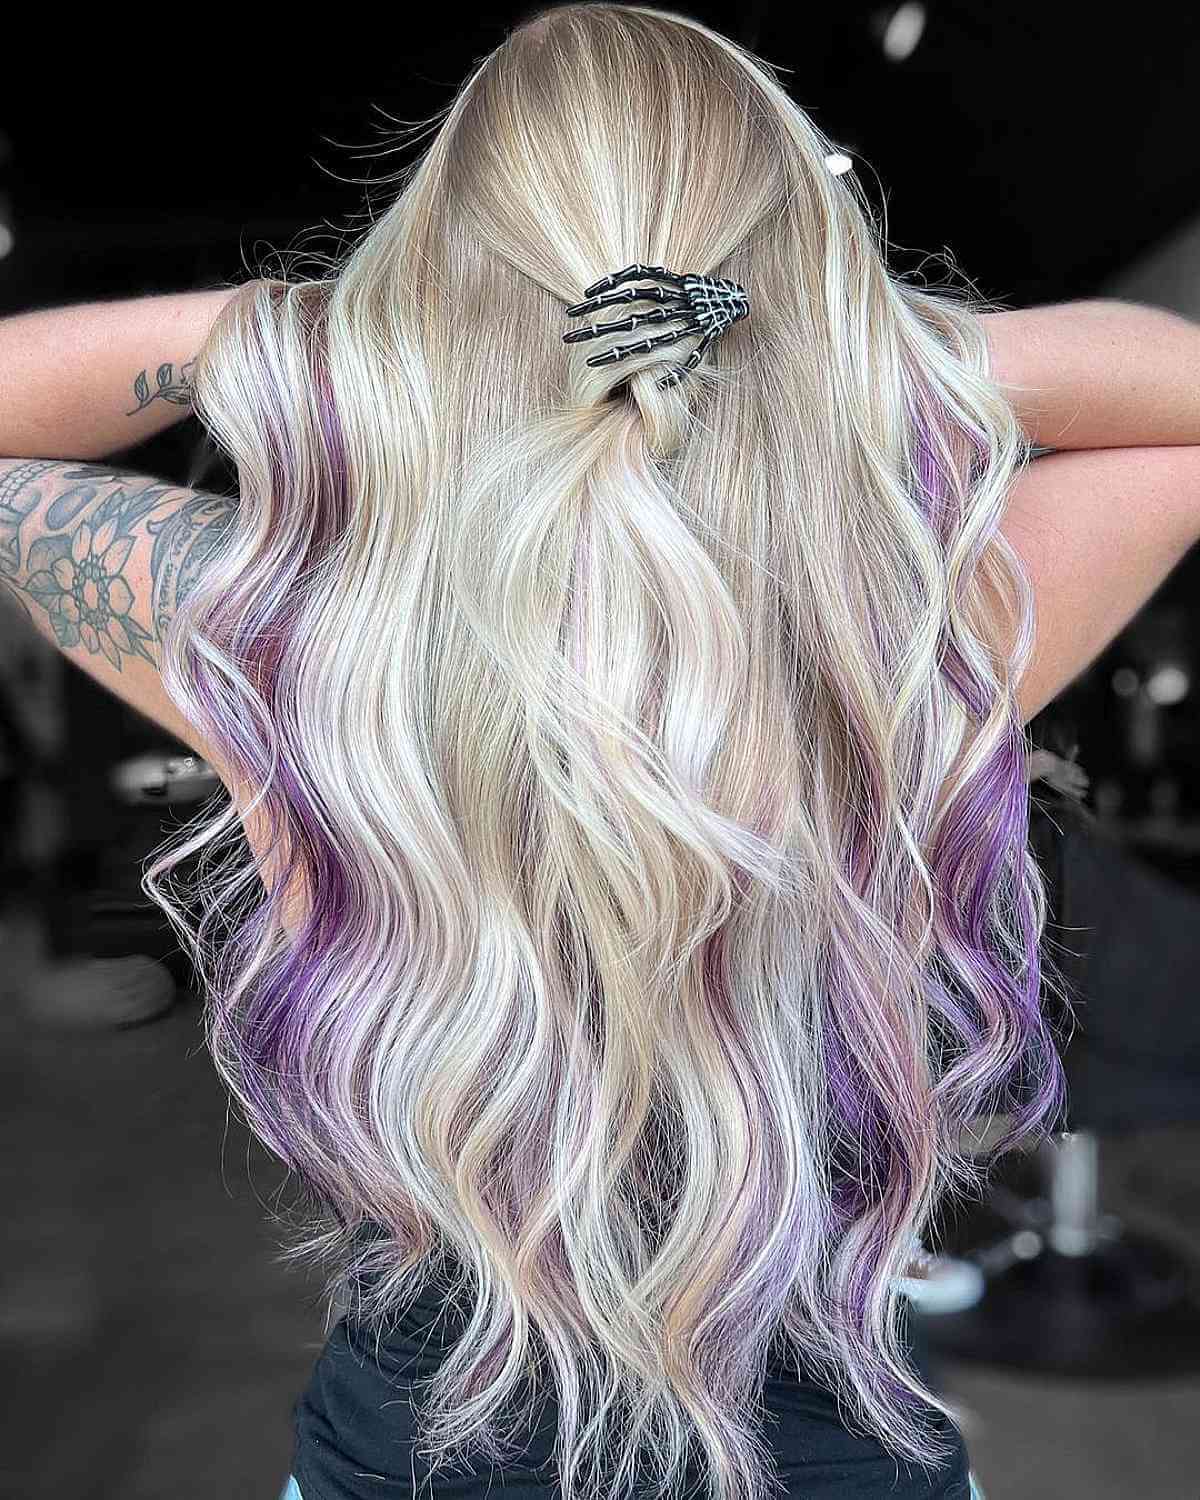 Gorgeous Long Blonde Hair with Hidden Peekaboo Purple Highlights